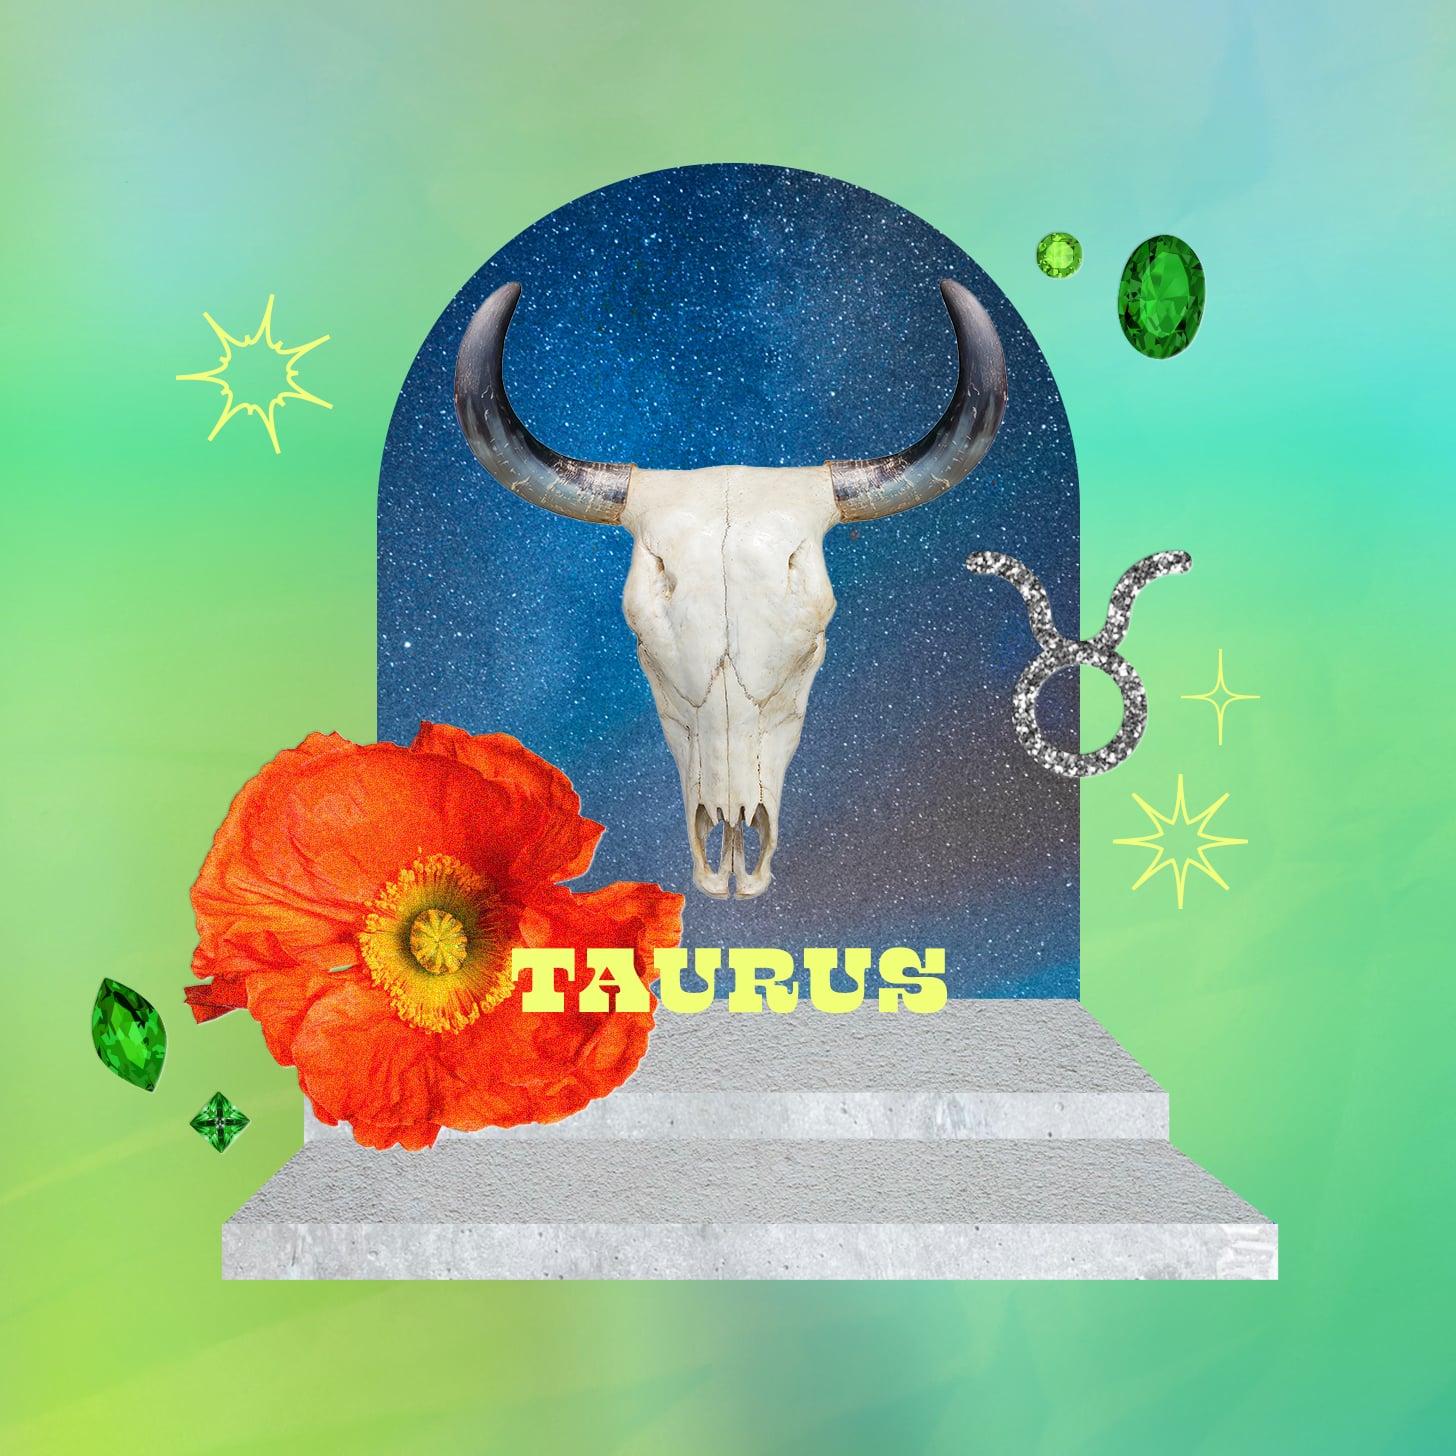 Taurus weekly horoscope for May 1, 2022